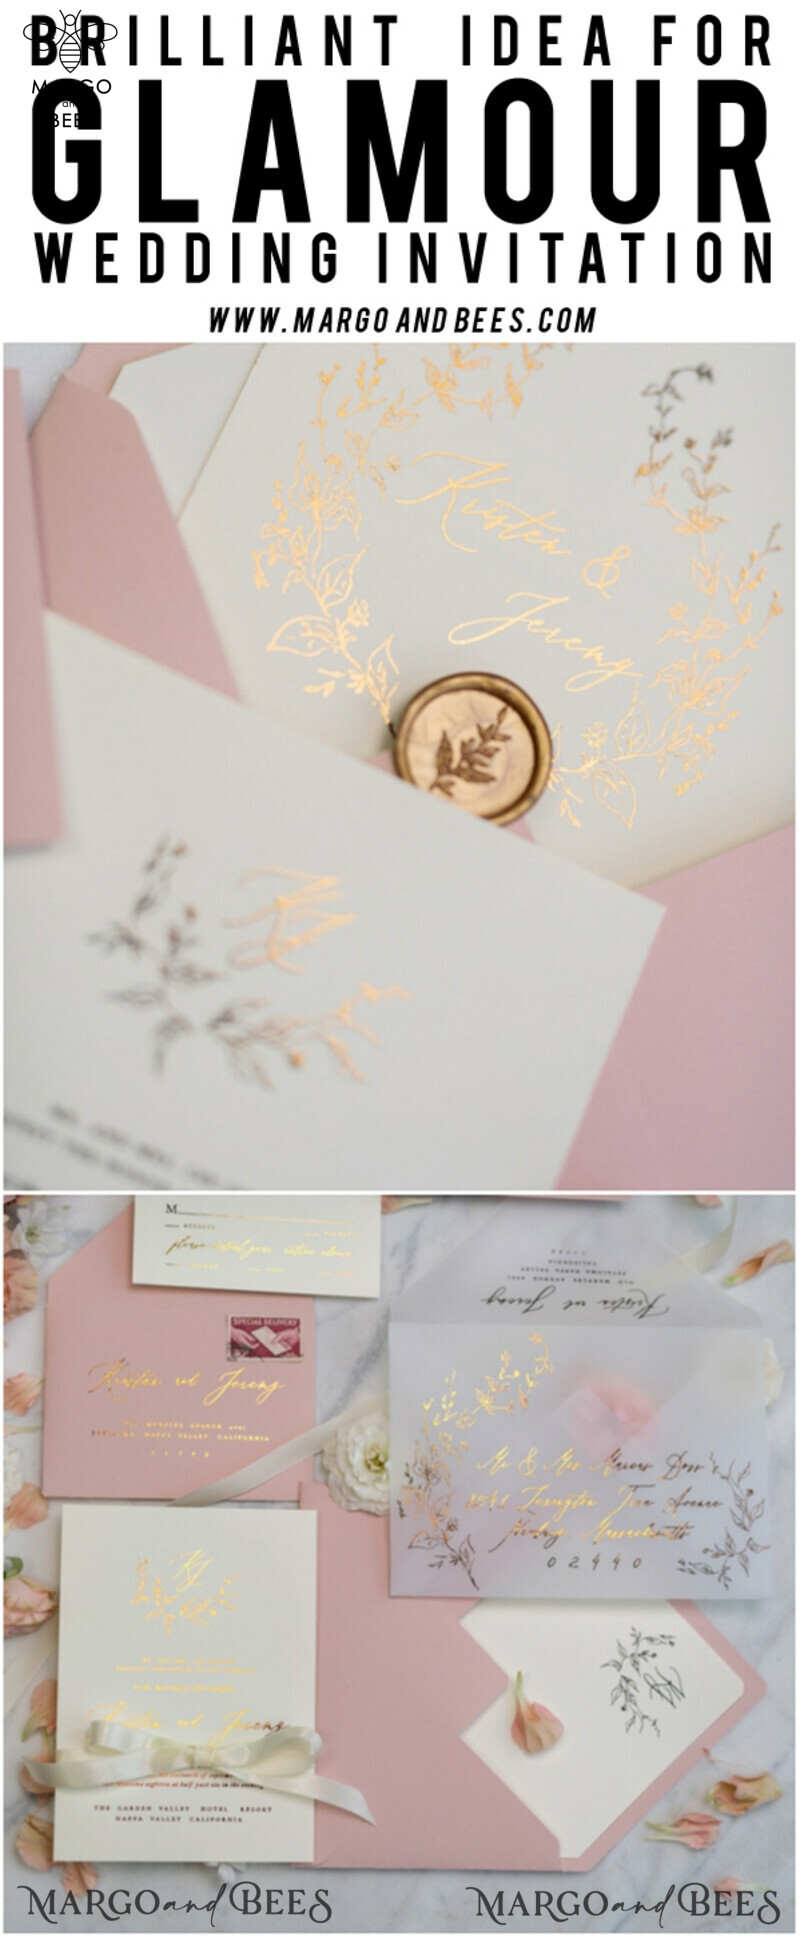 Bespoke Vellum Wedding Invitation Suite: Romantic Blush Pink and Glamour Gold Foil for Elegant Golden Wedding Invites-36